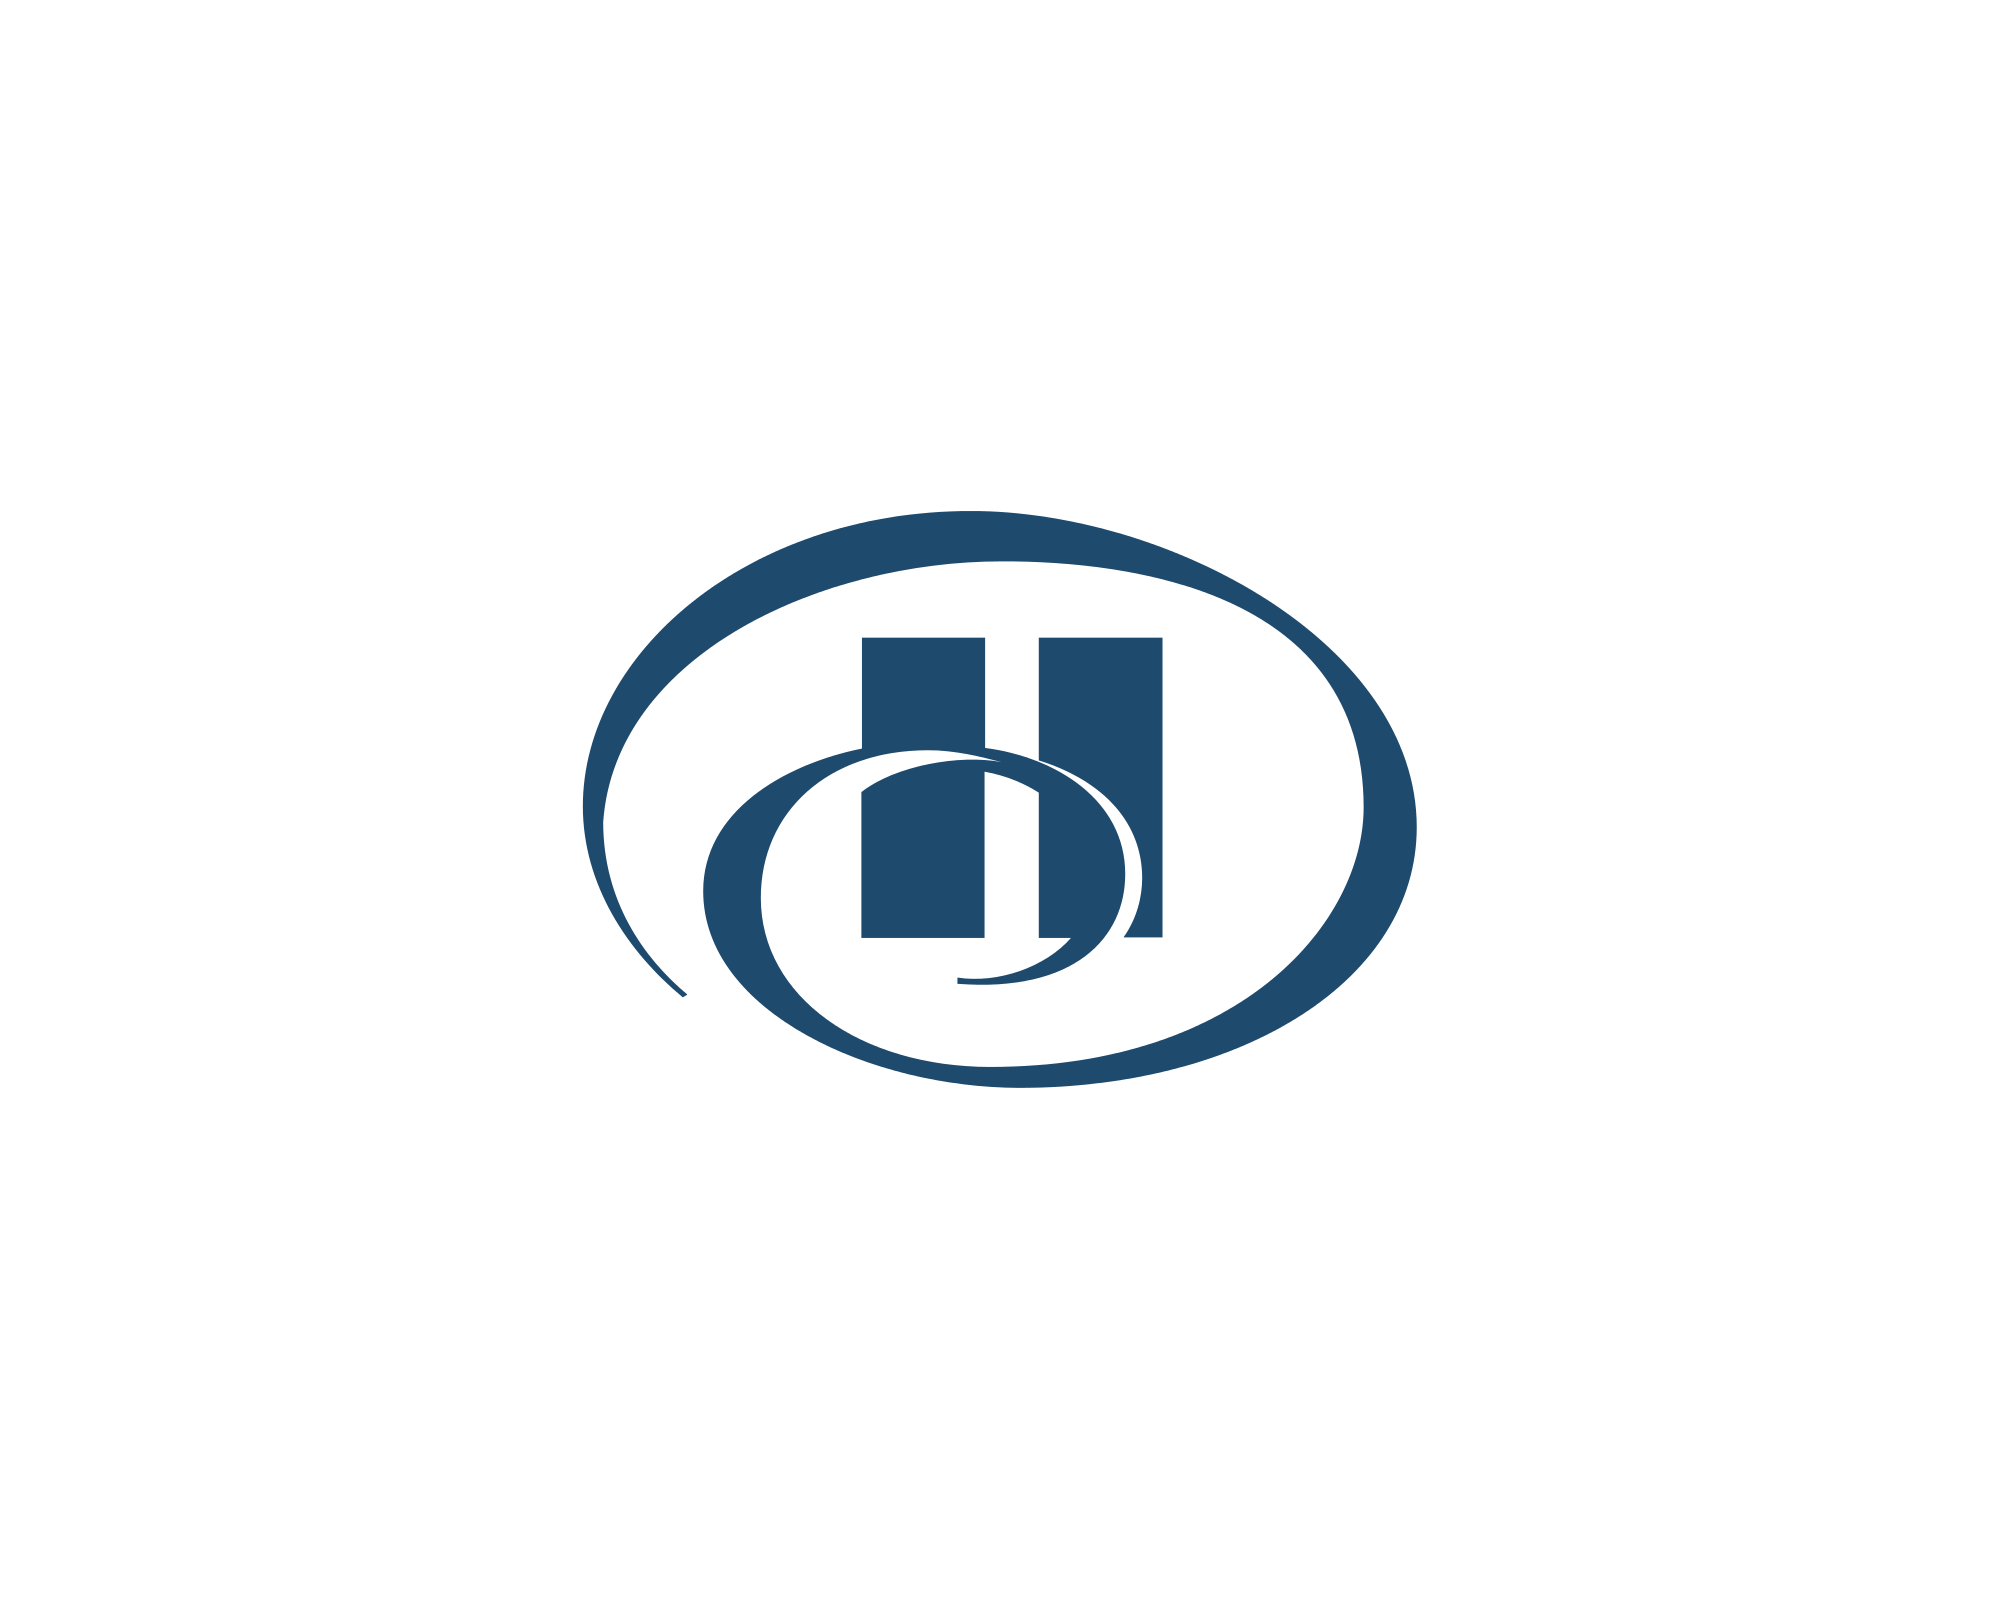 H Company Logo - H Logo Png Images